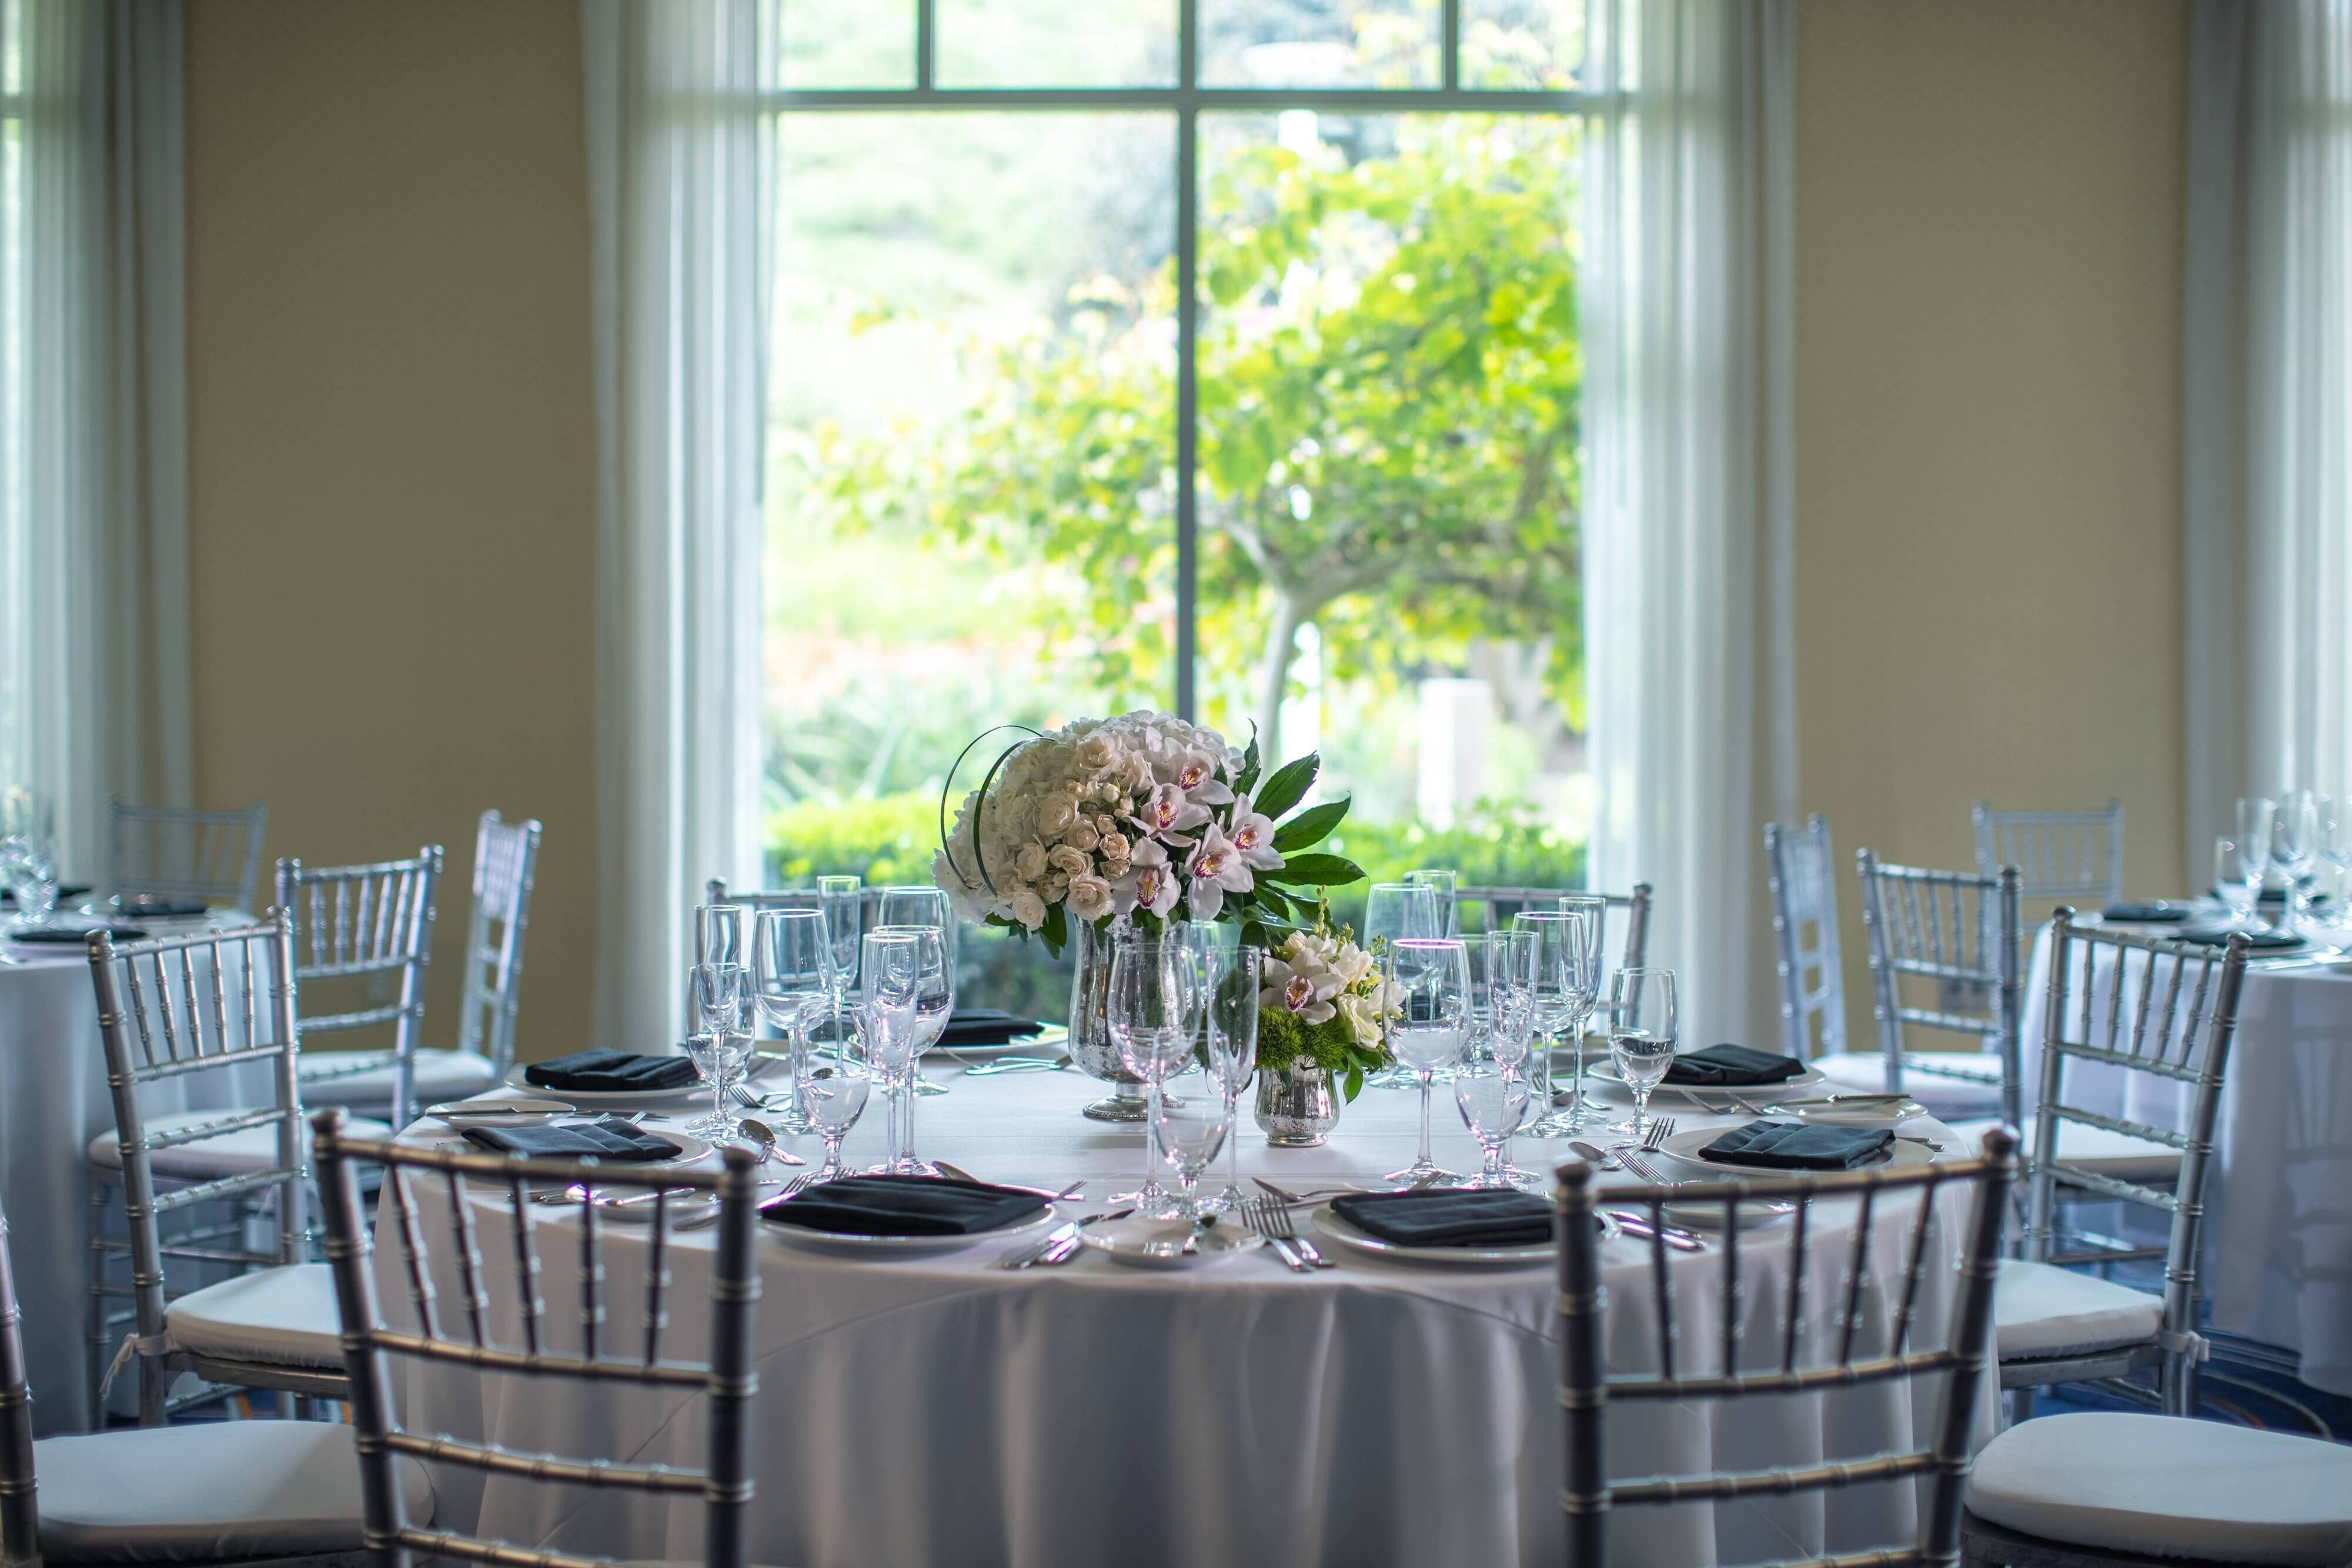 Renaissance Ballroom - Wedding Reception Details